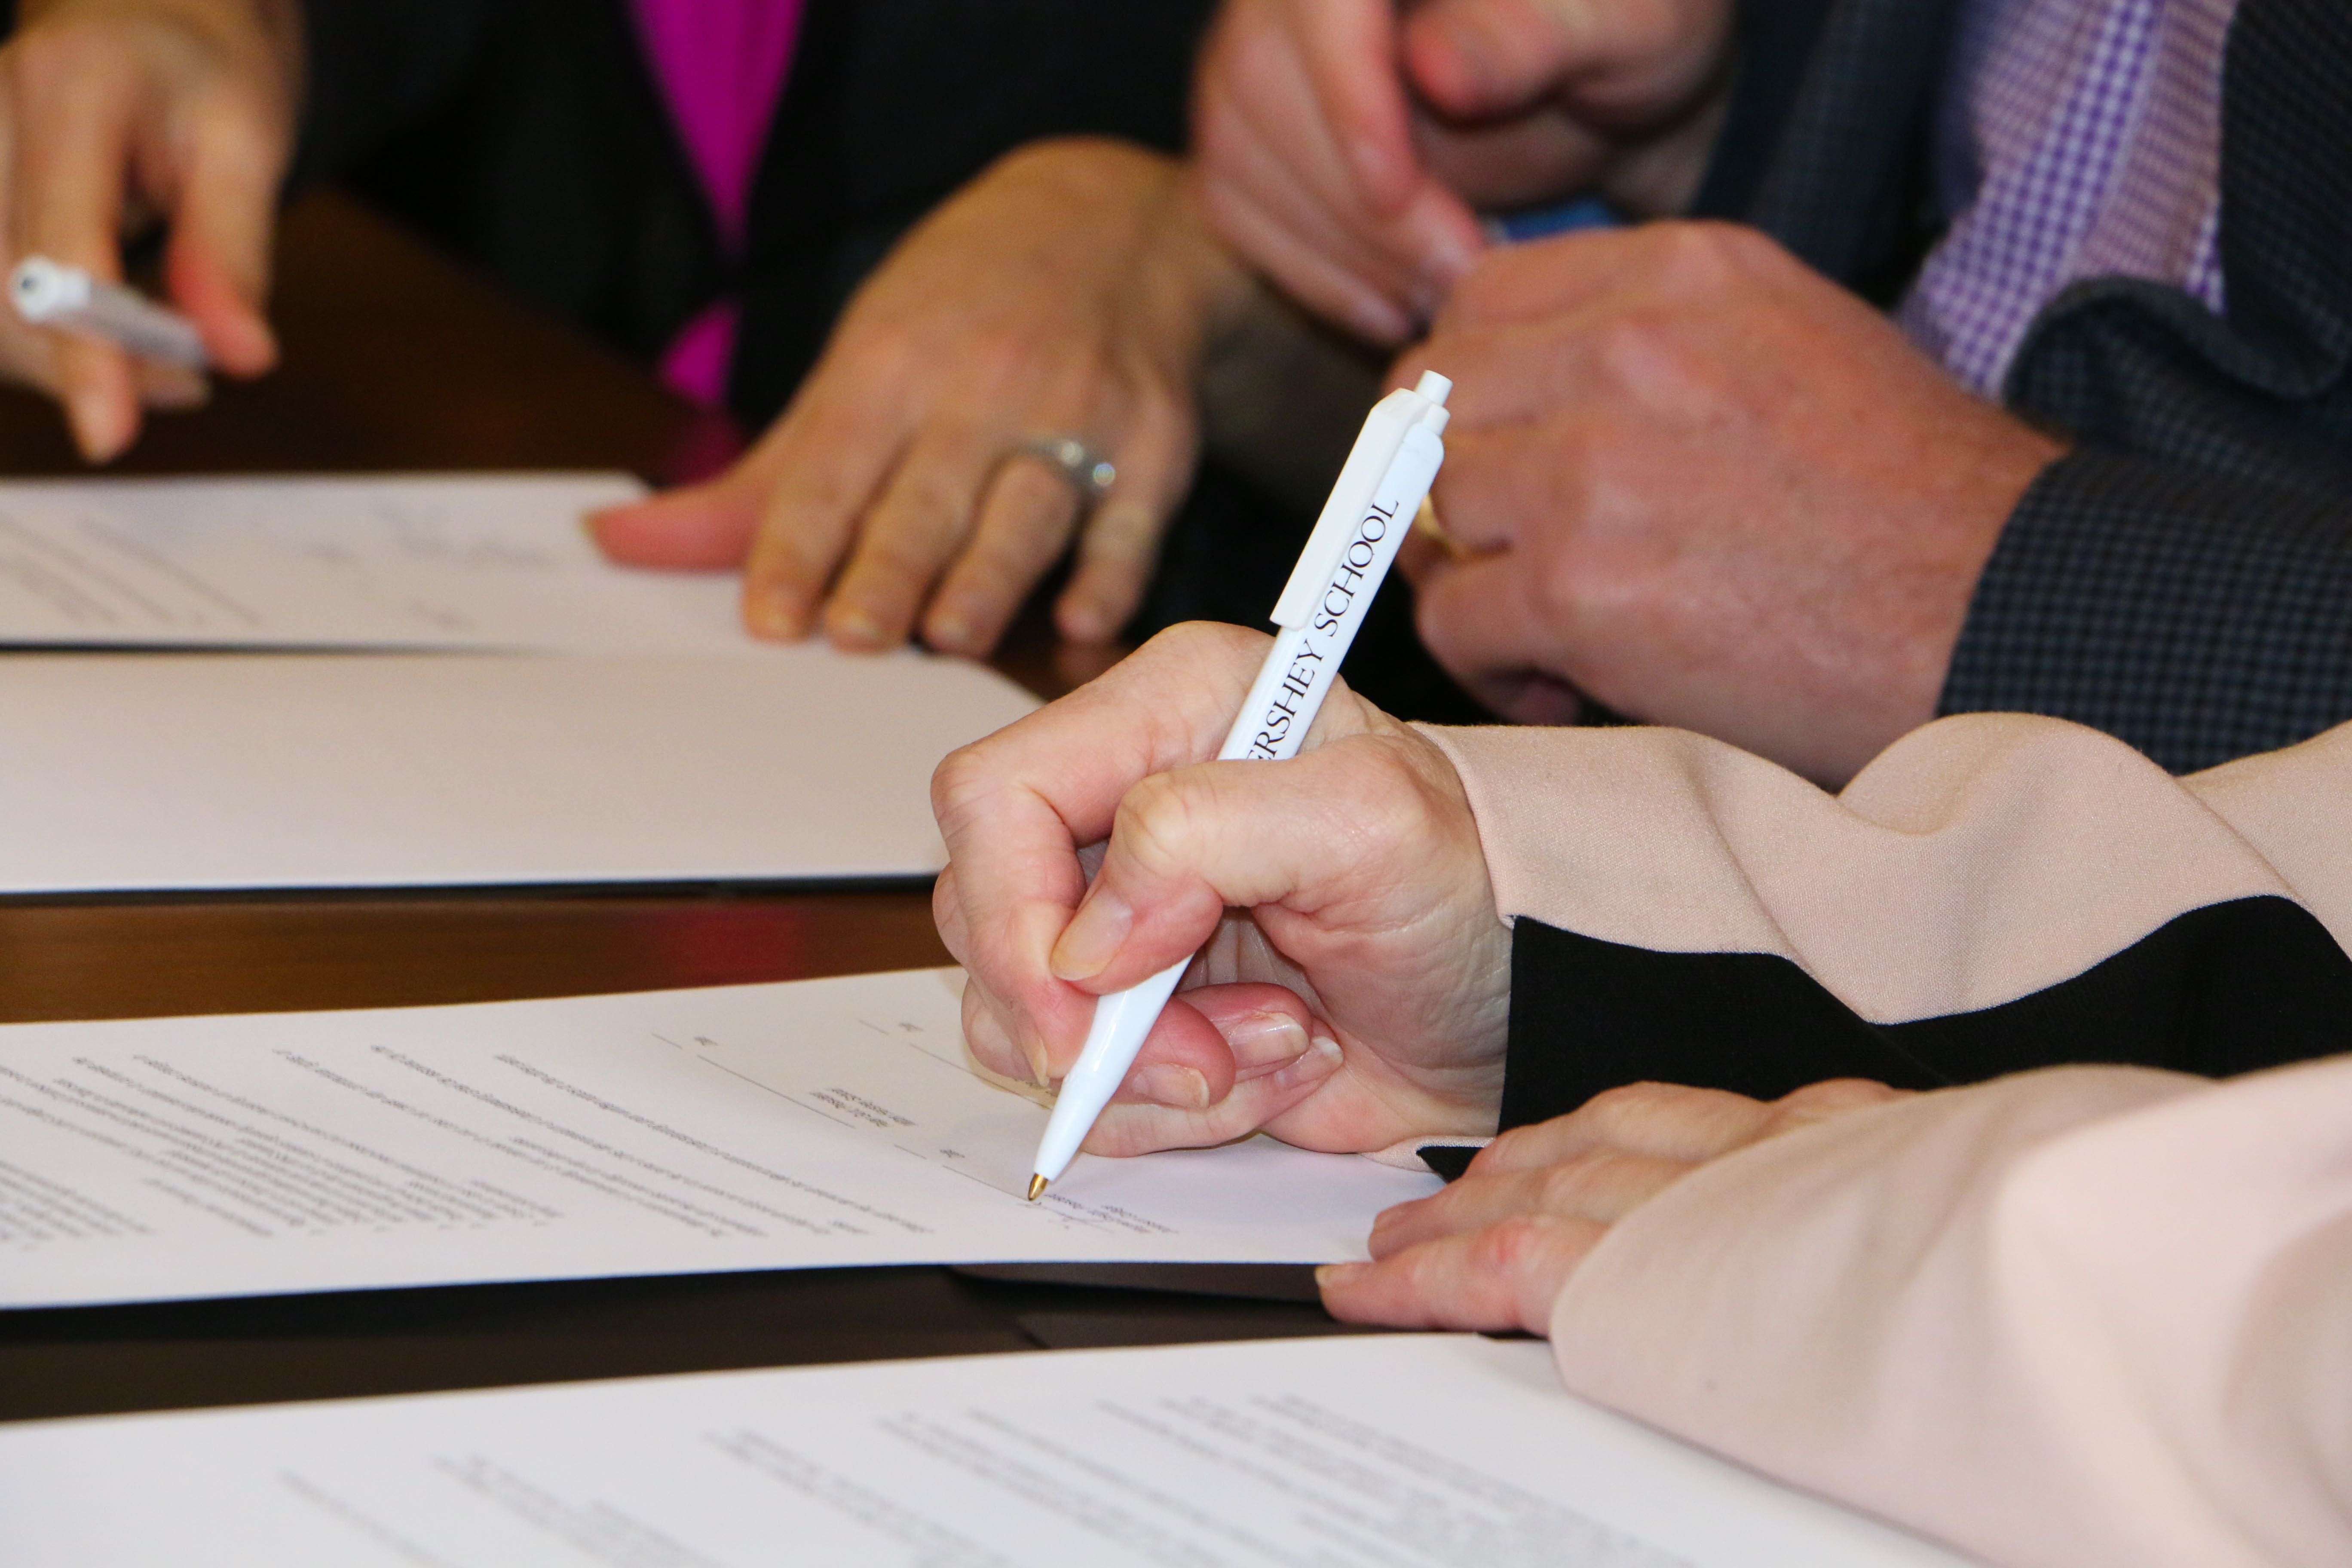 Milton Hershey School signed a Memorandum of Understanding with Dickinson College.